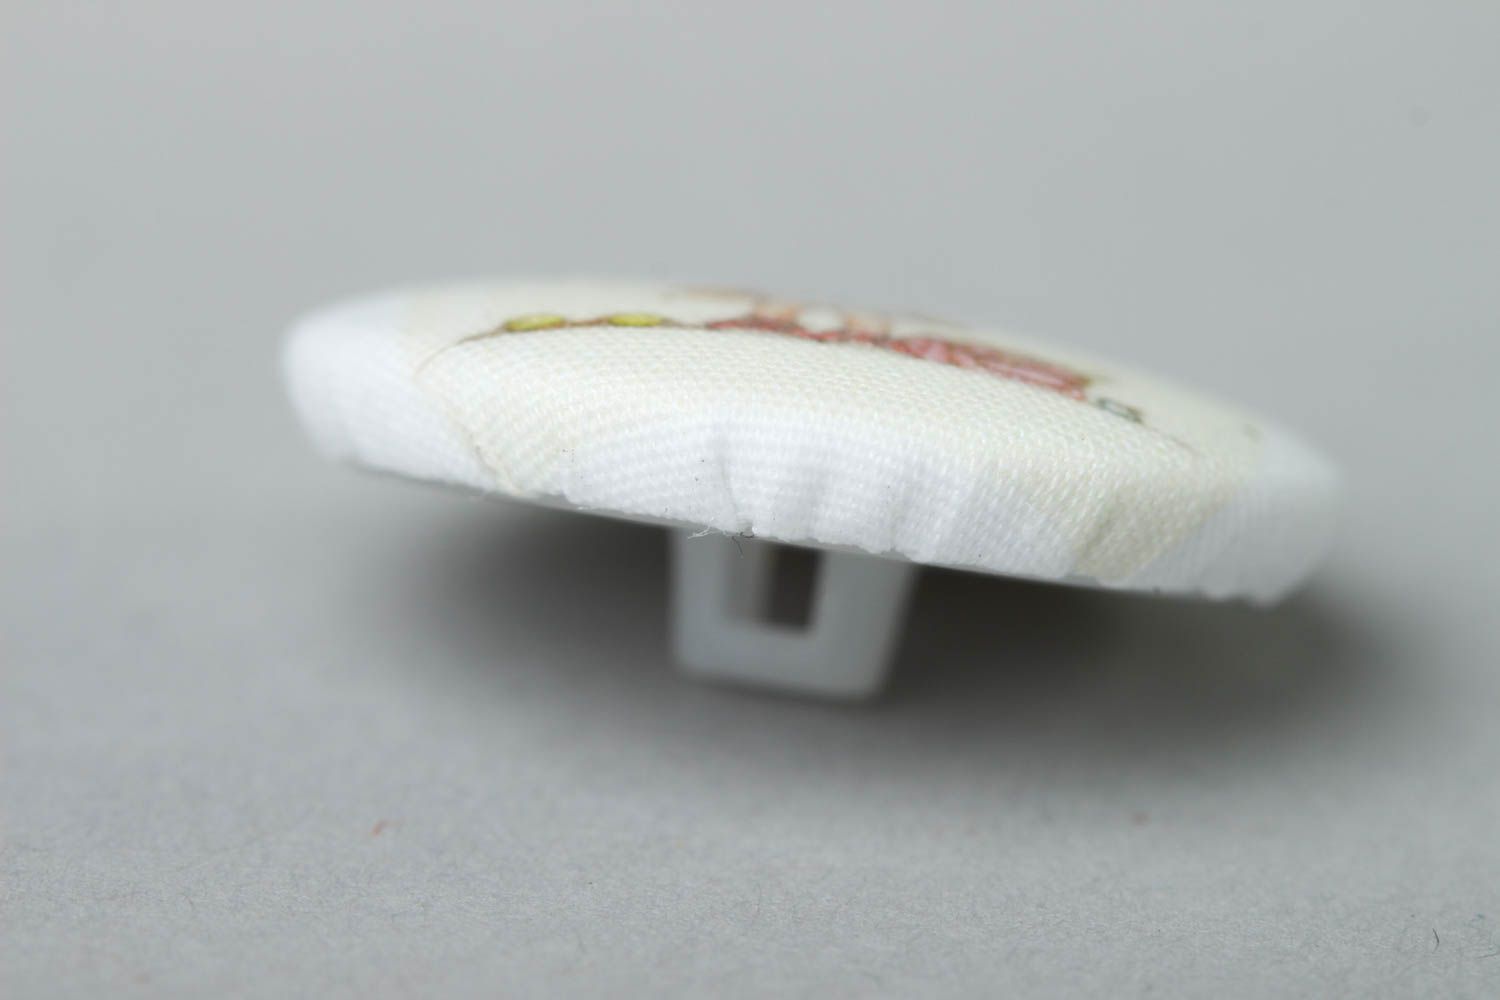 Beautiful handmade plastic button stylish needlework supplies sewing ideas photo 4